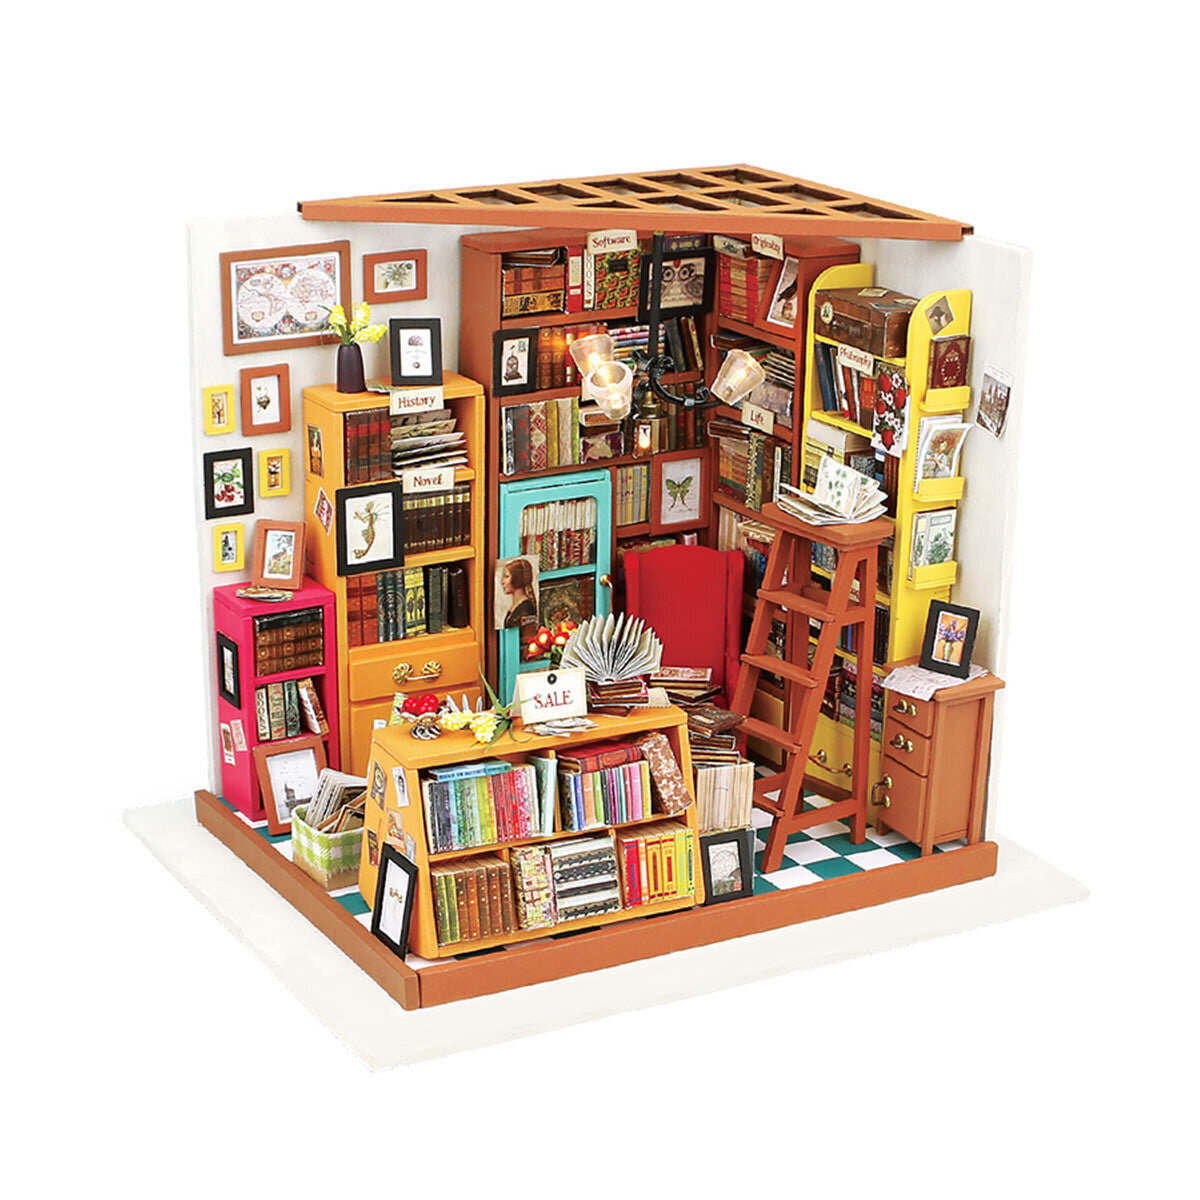 Casa en miniatura - Biblioteca de estudio de Sam Rolife DG102